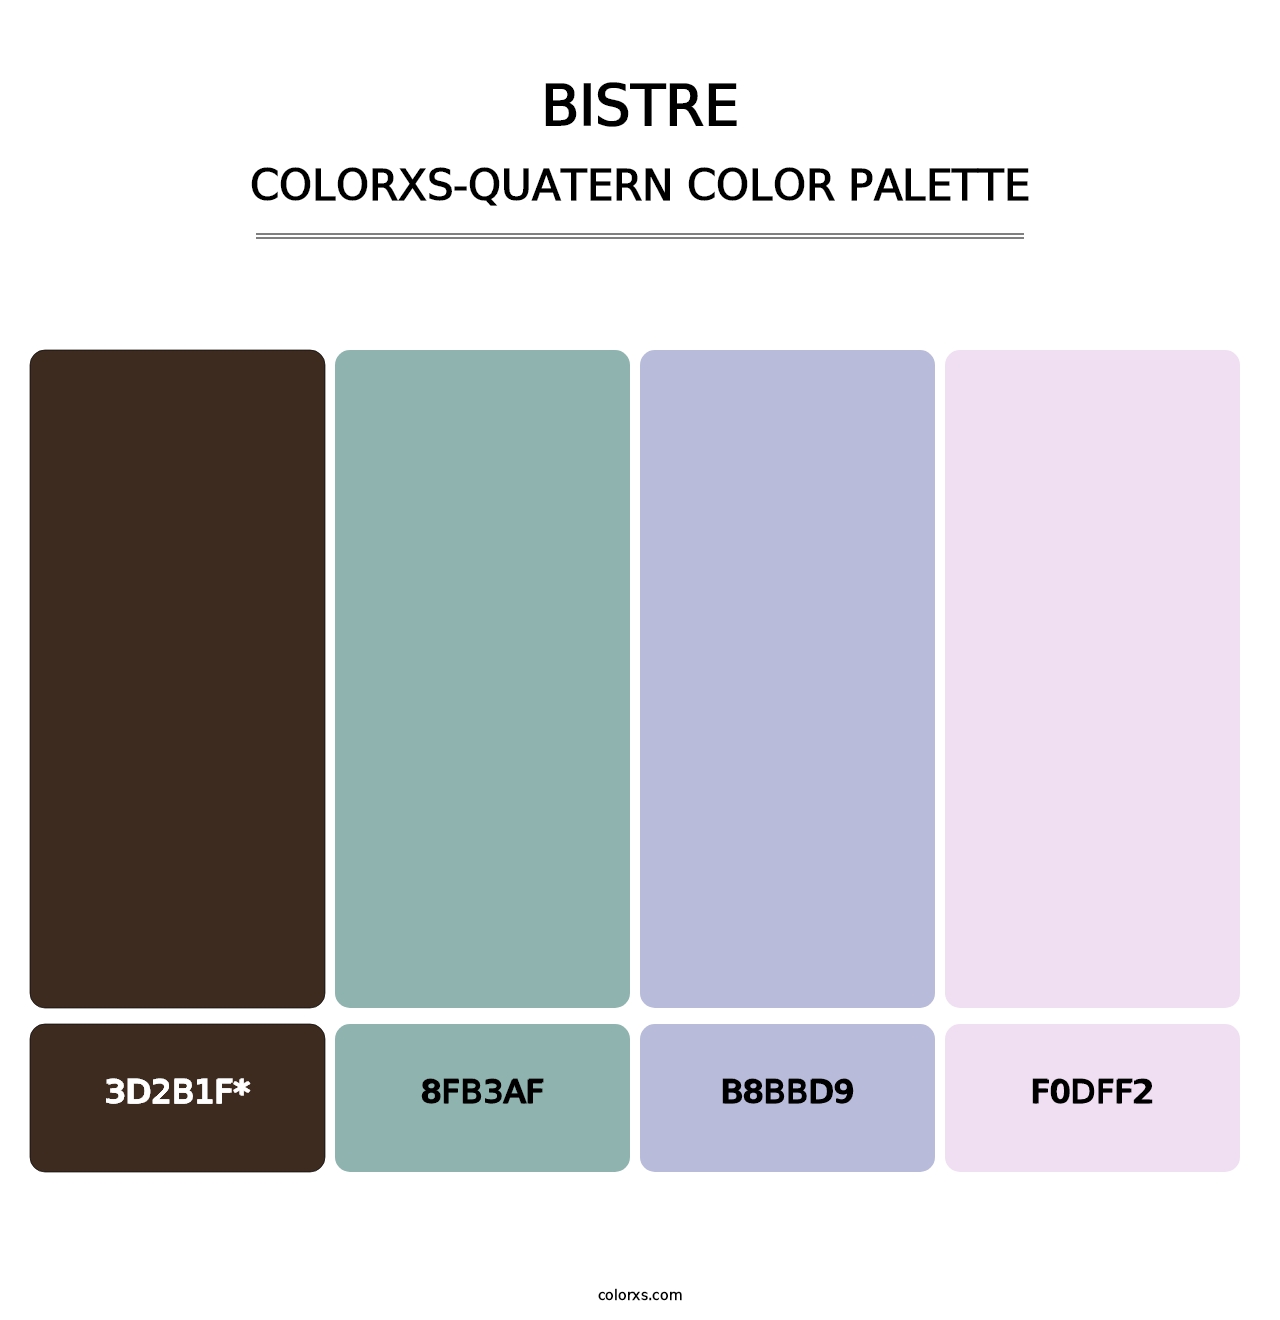 Bistre - Colorxs Quatern Palette